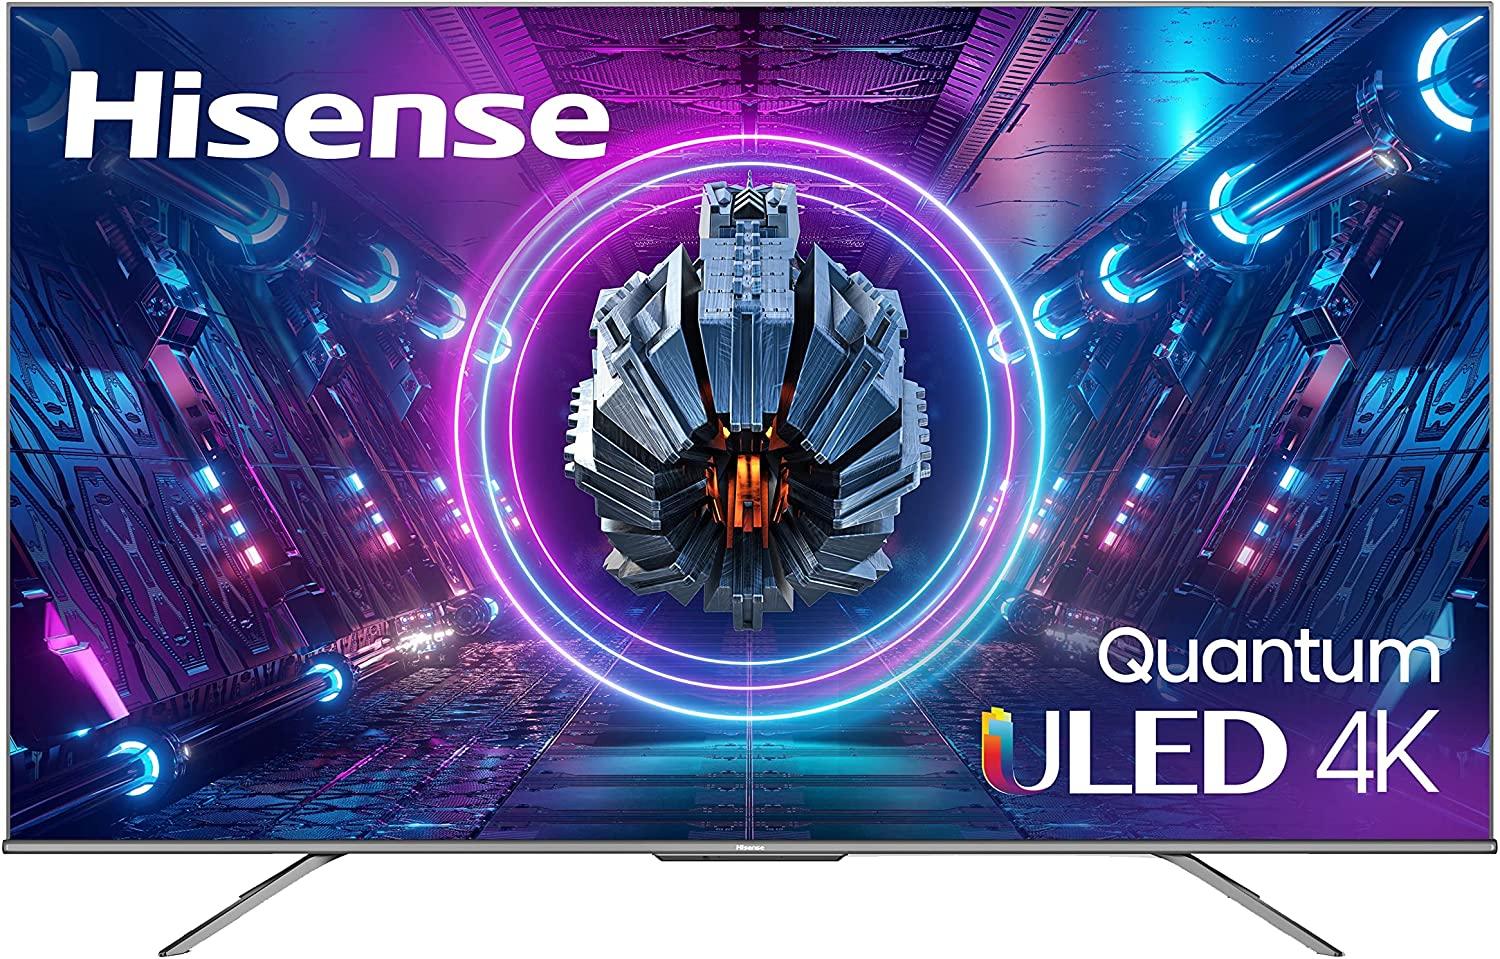 75in Hisense 75U7G 4K ULED Quantum Dot HDR Smart TV for $899.99 Shipped